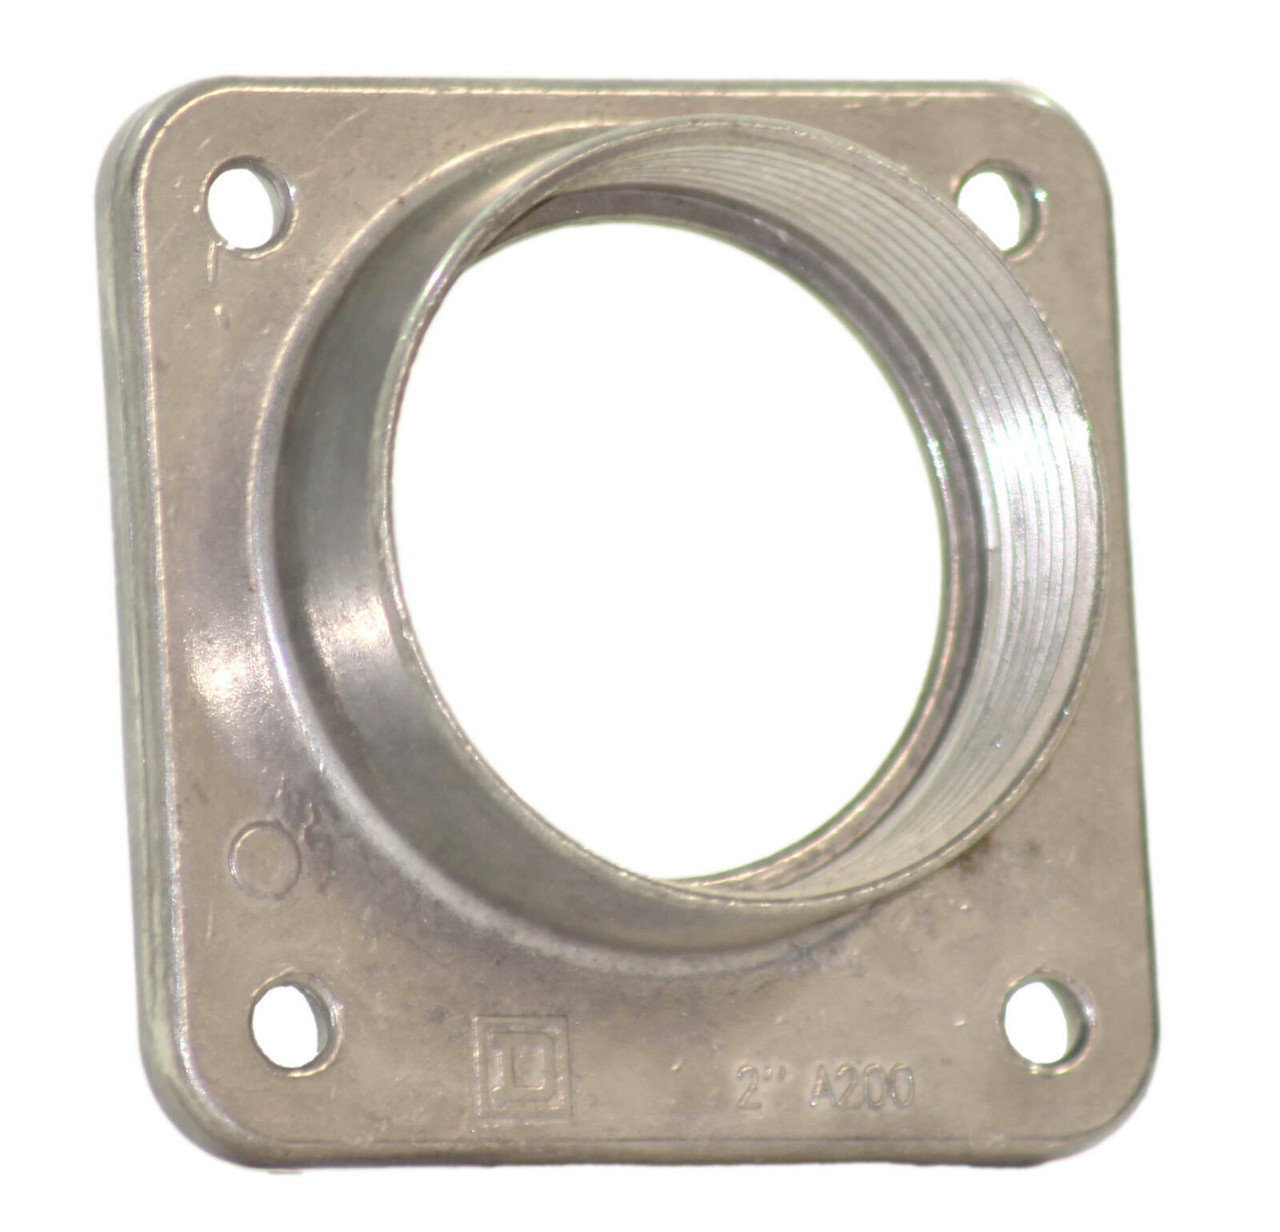 Square D A200 Conduit Hub Material: Aluminium Diameter: 2 Inch